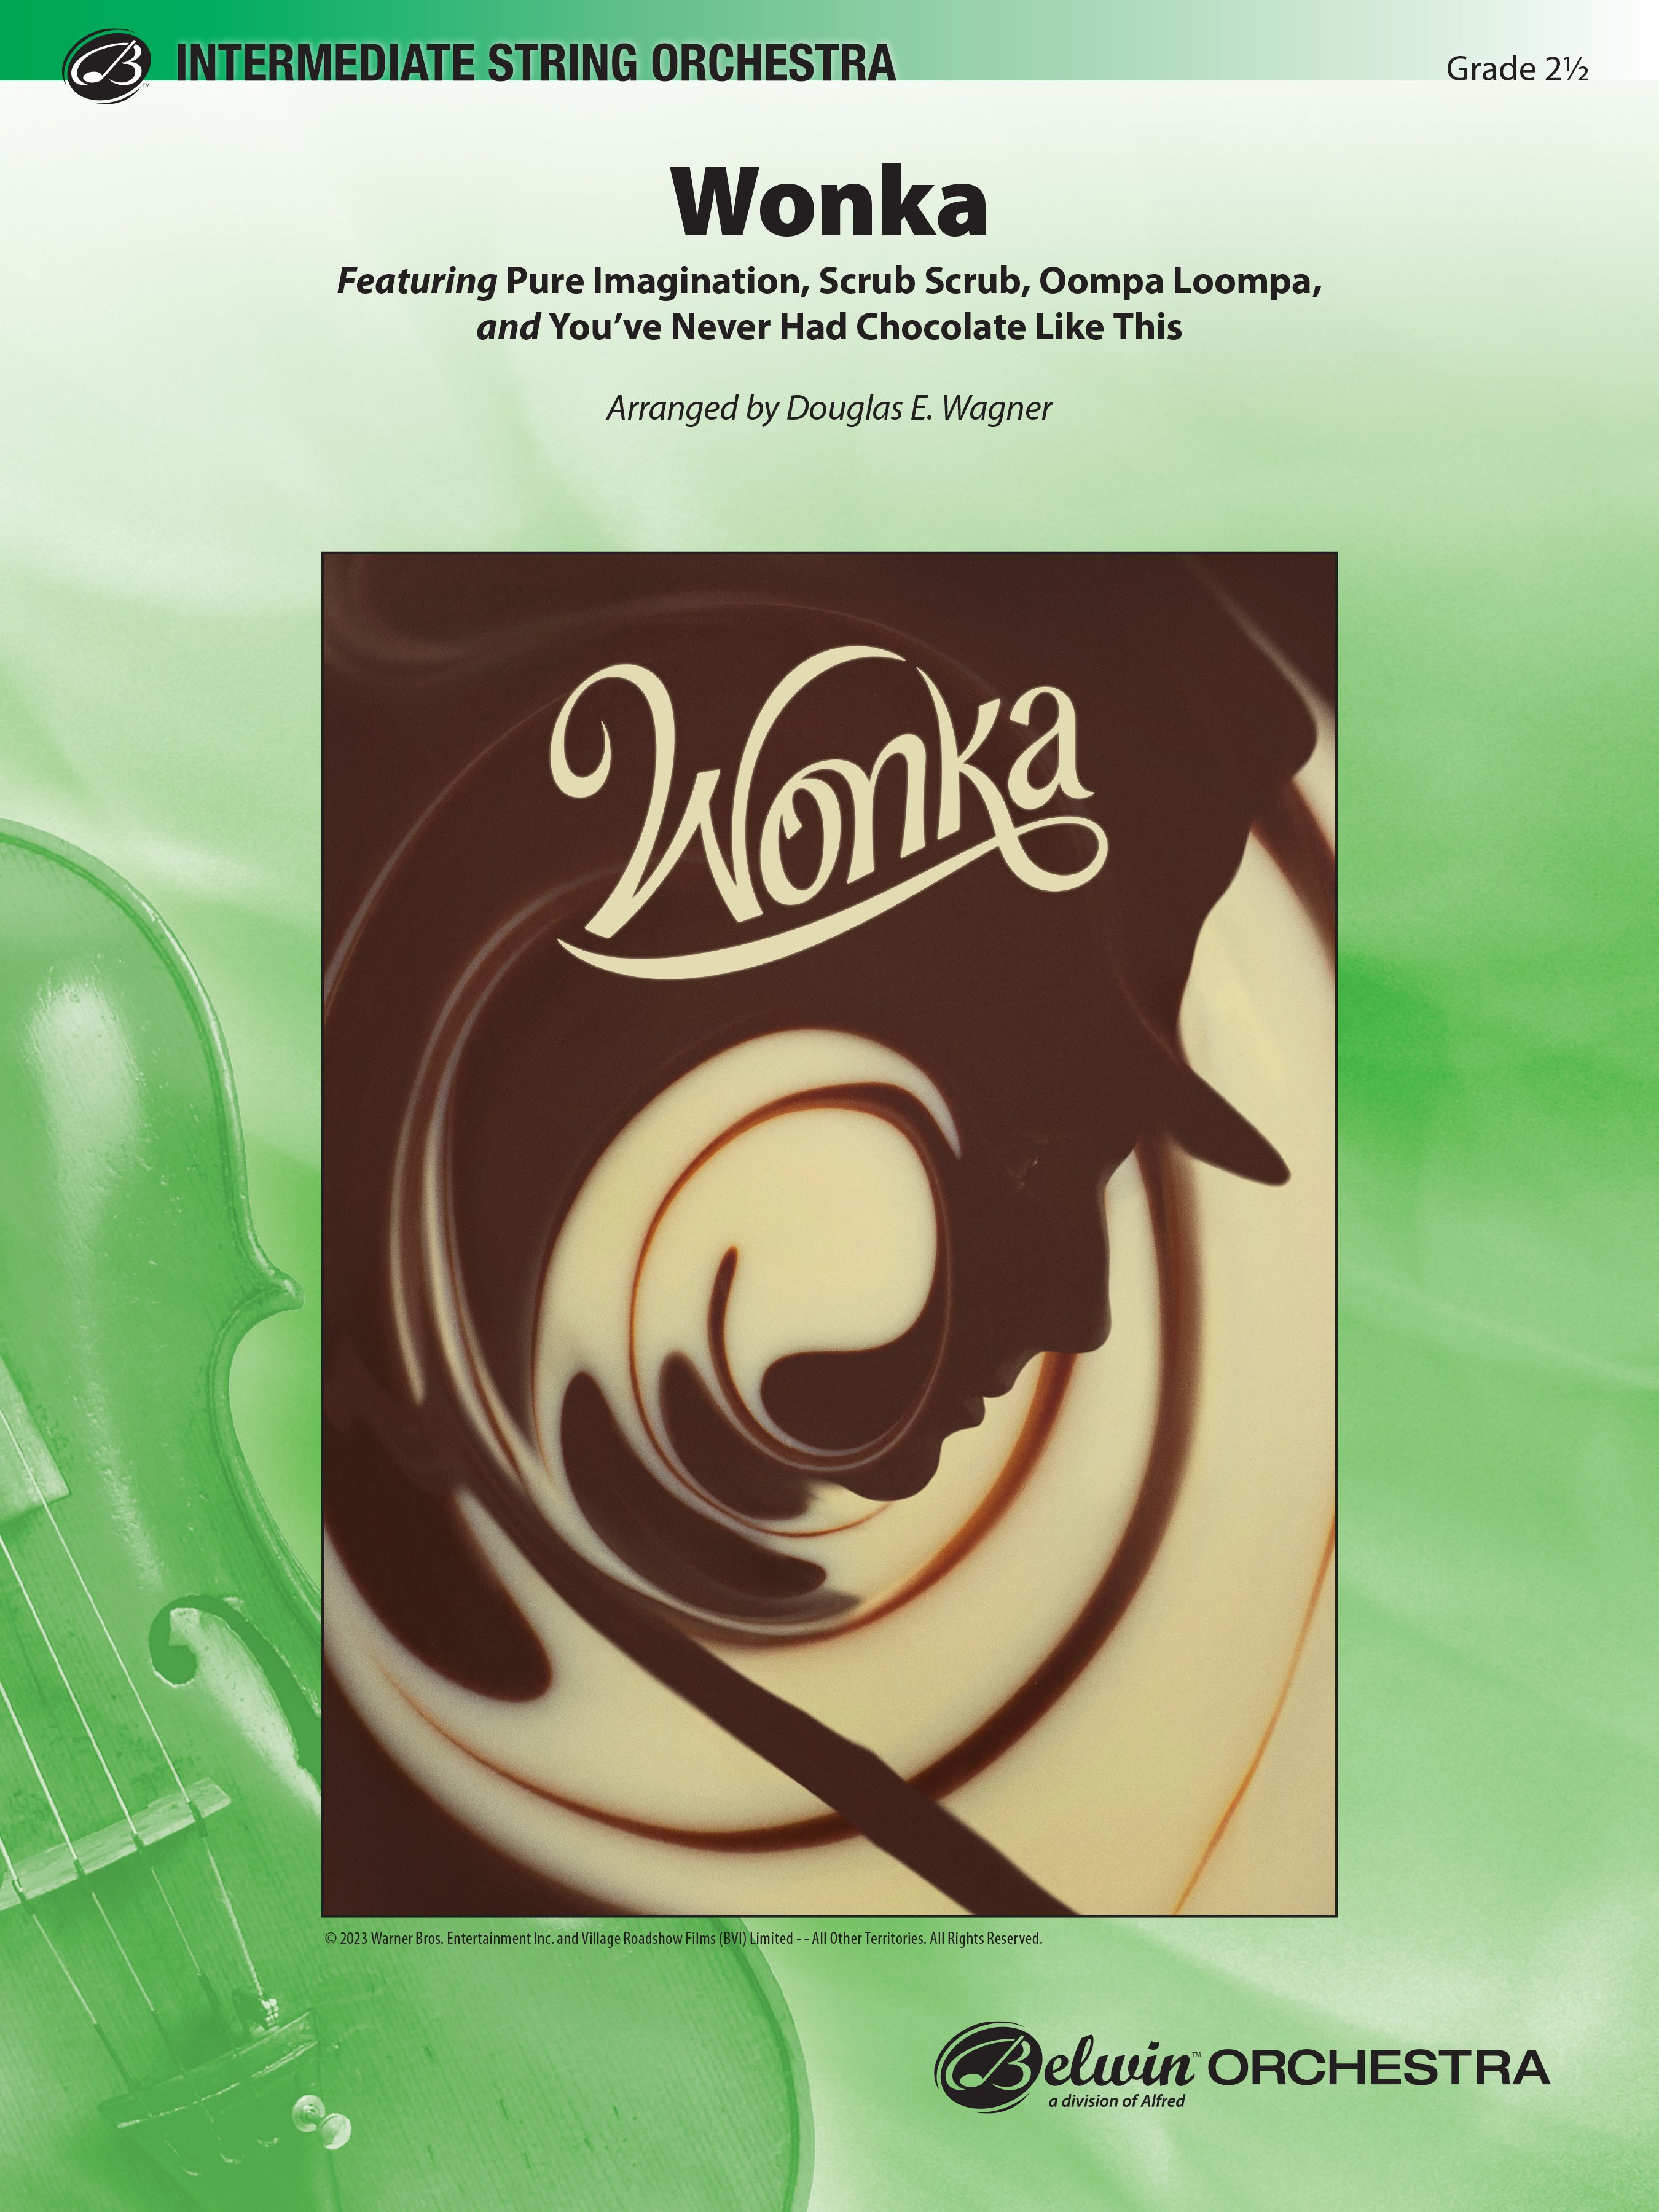 Wonka orchestra sheet music cover